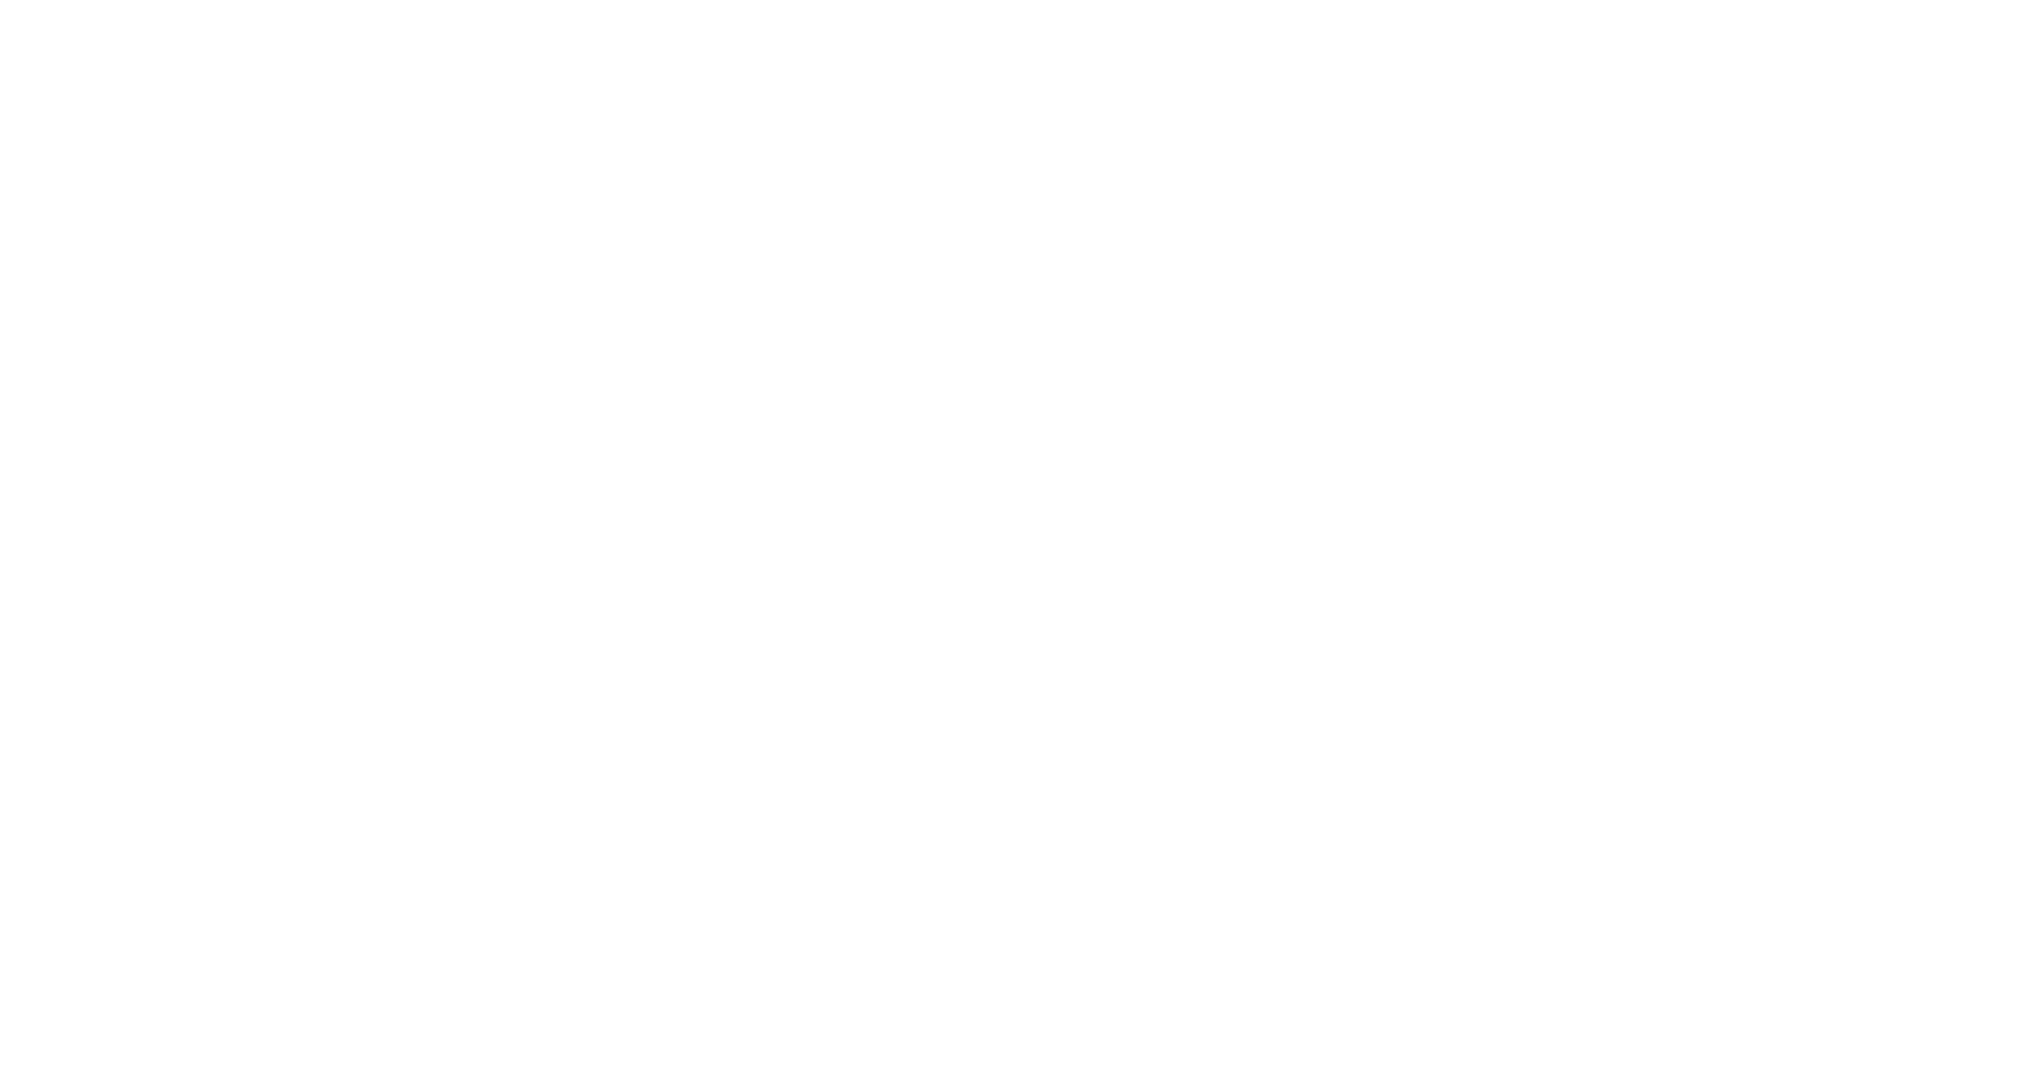 Julins Backyard Barbecue